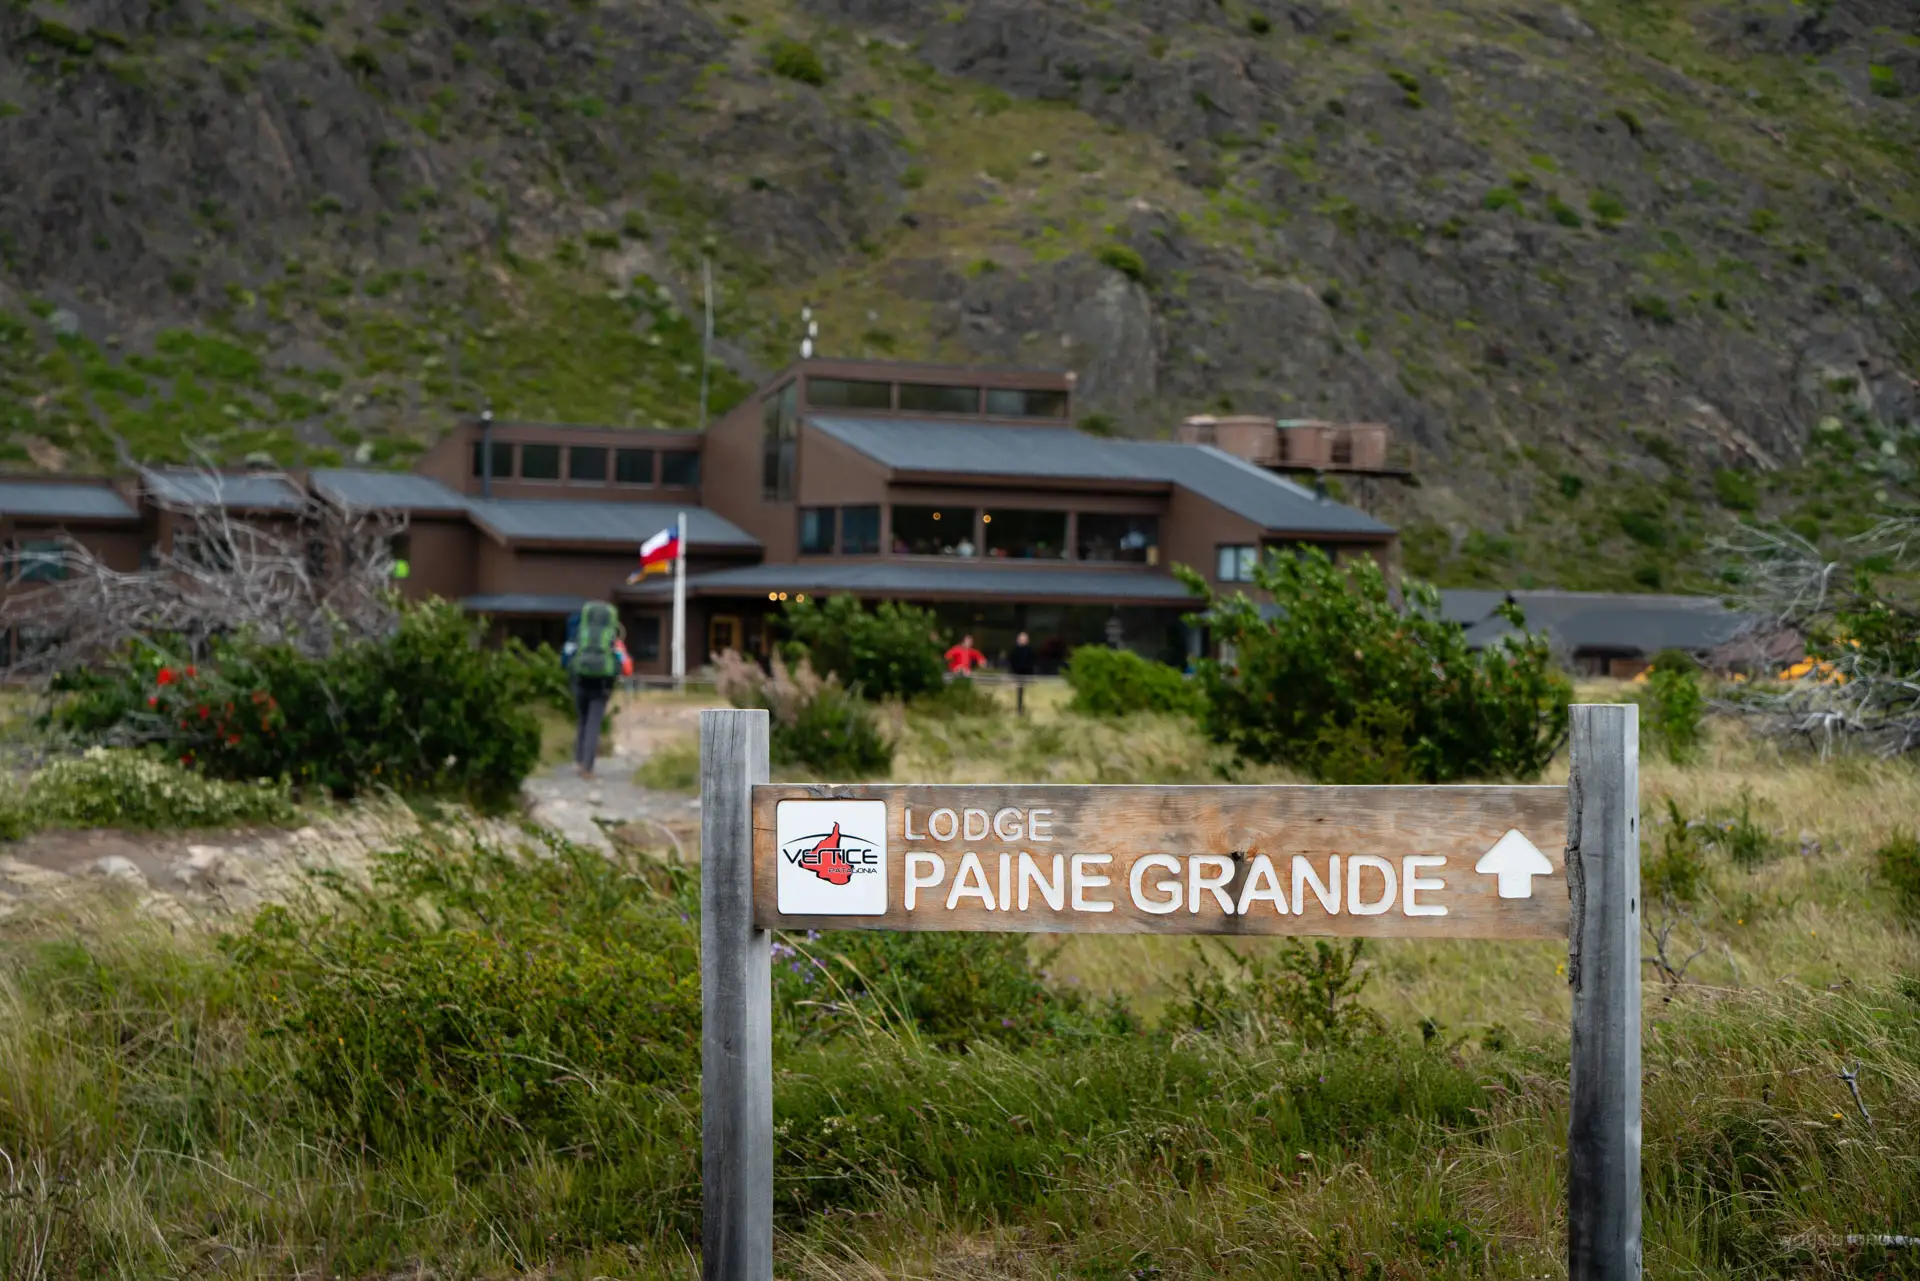 How to book campsites in Torres del Paine